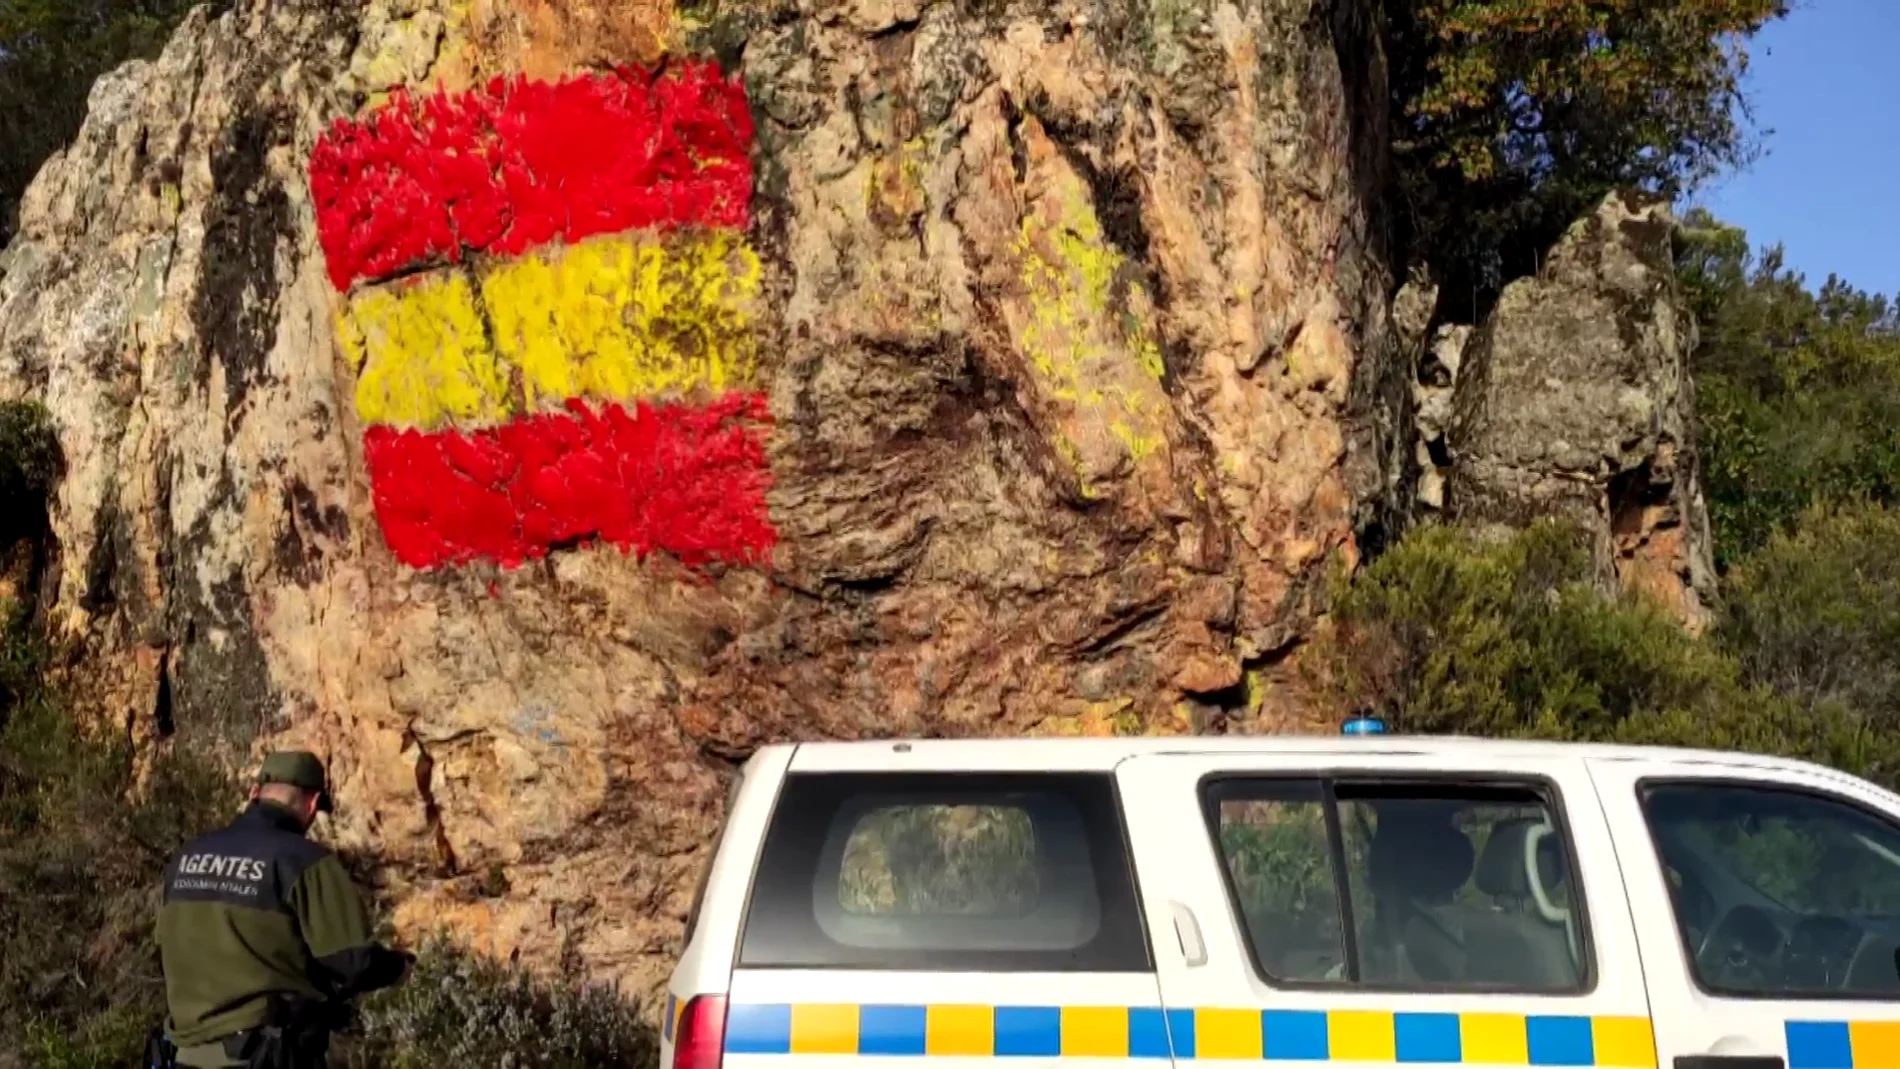 Bandera de España sobre una pintura rupestre